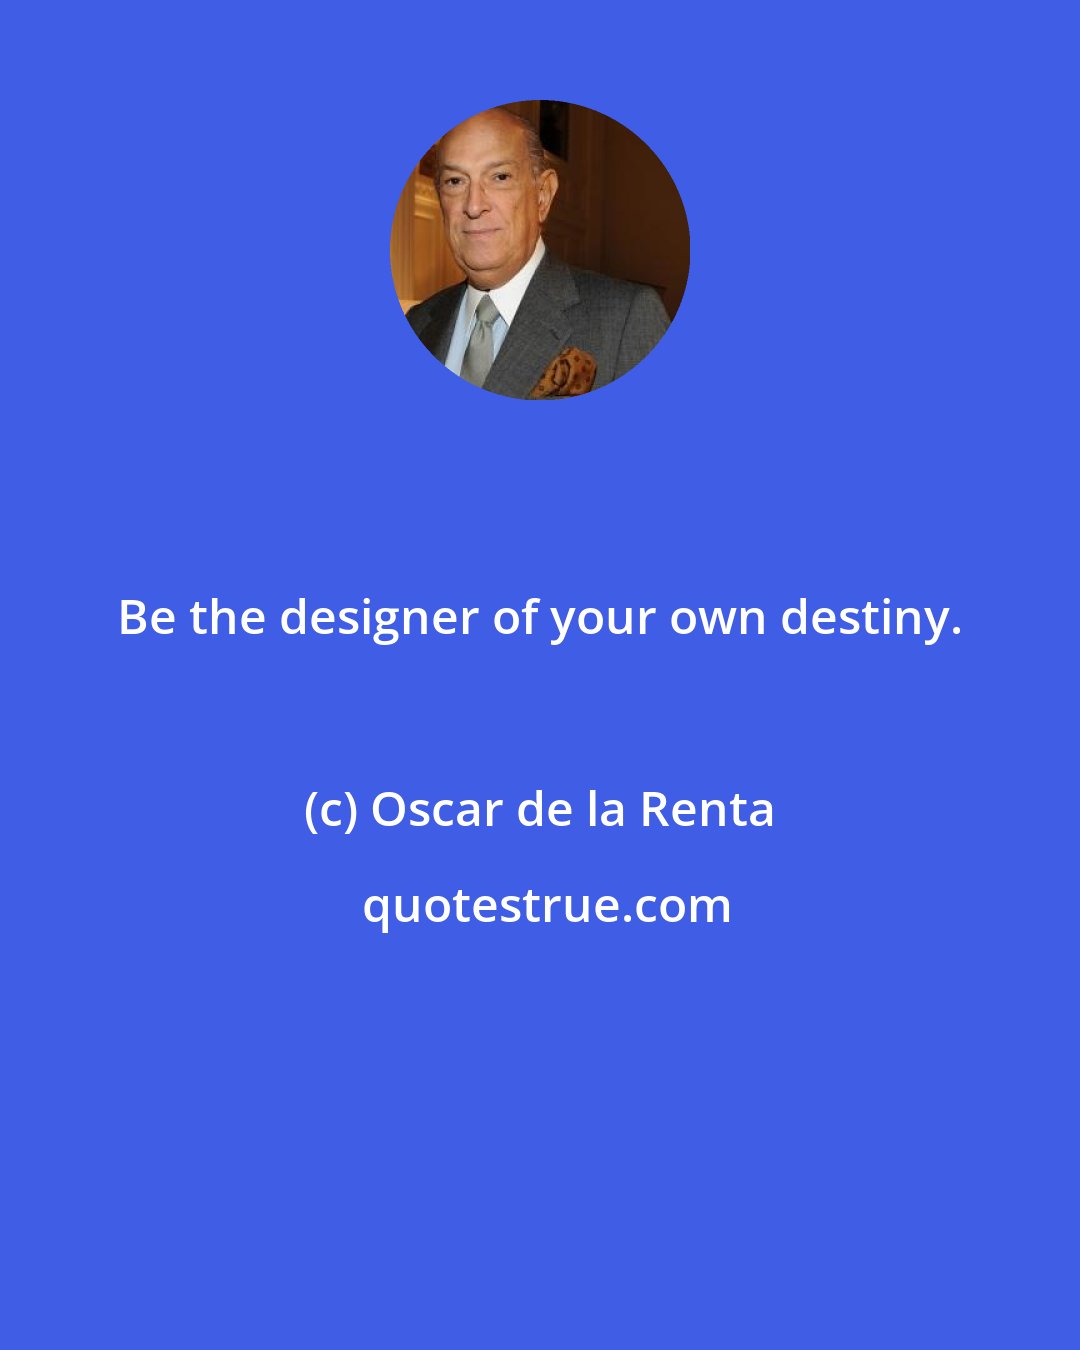 Oscar de la Renta: Be the designer of your own destiny.